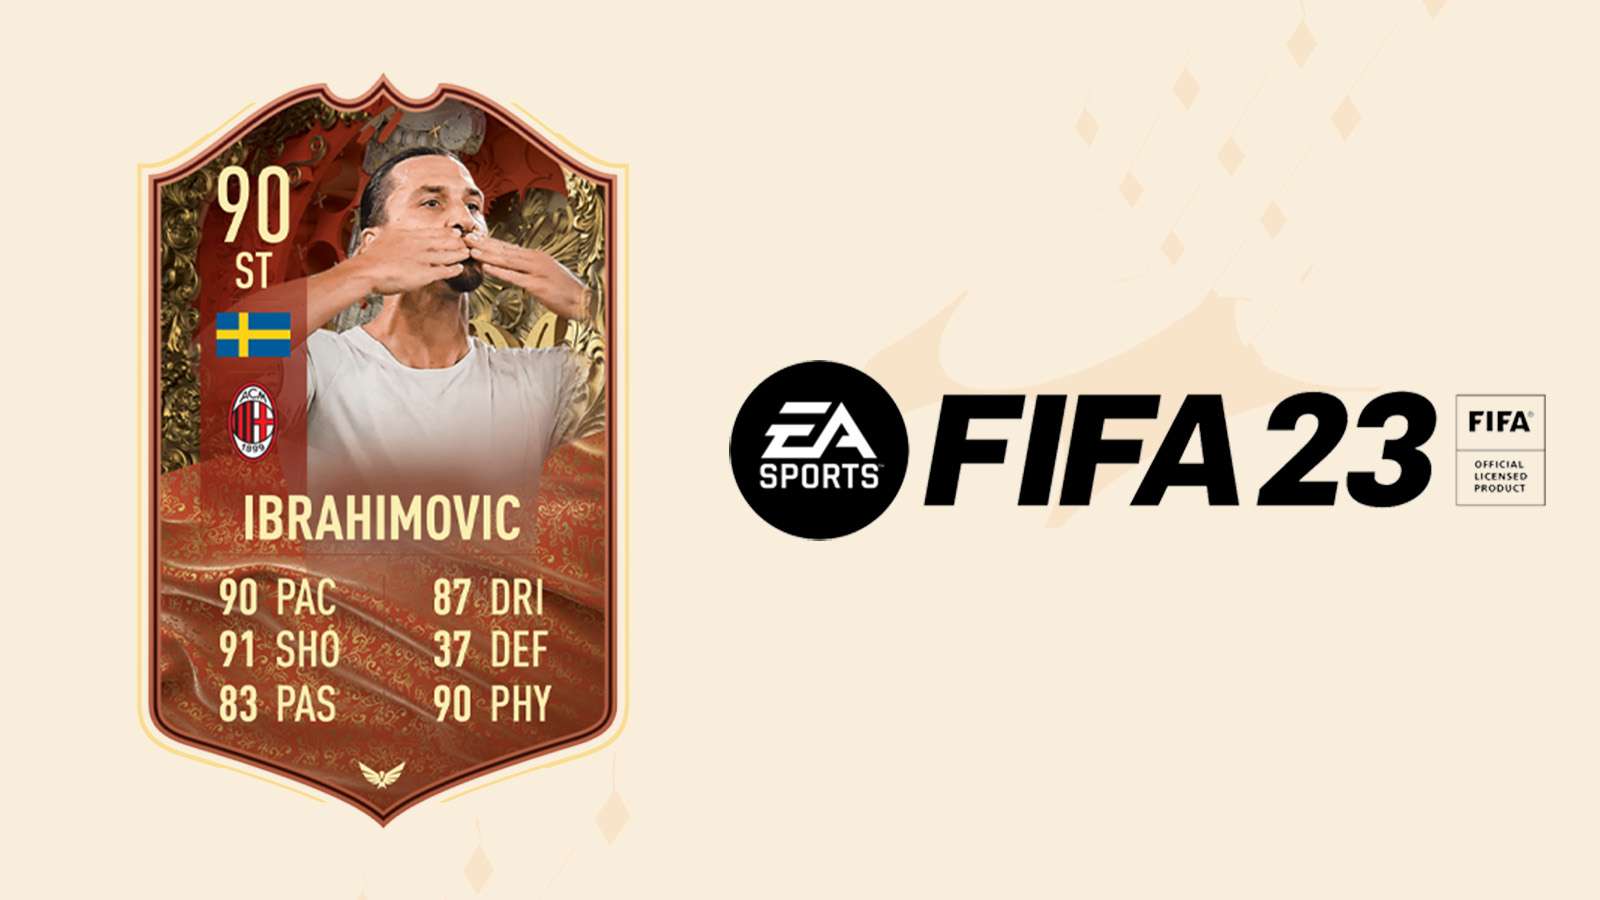 Ibrahimovic FUT Centurions card on FIFA 23 background